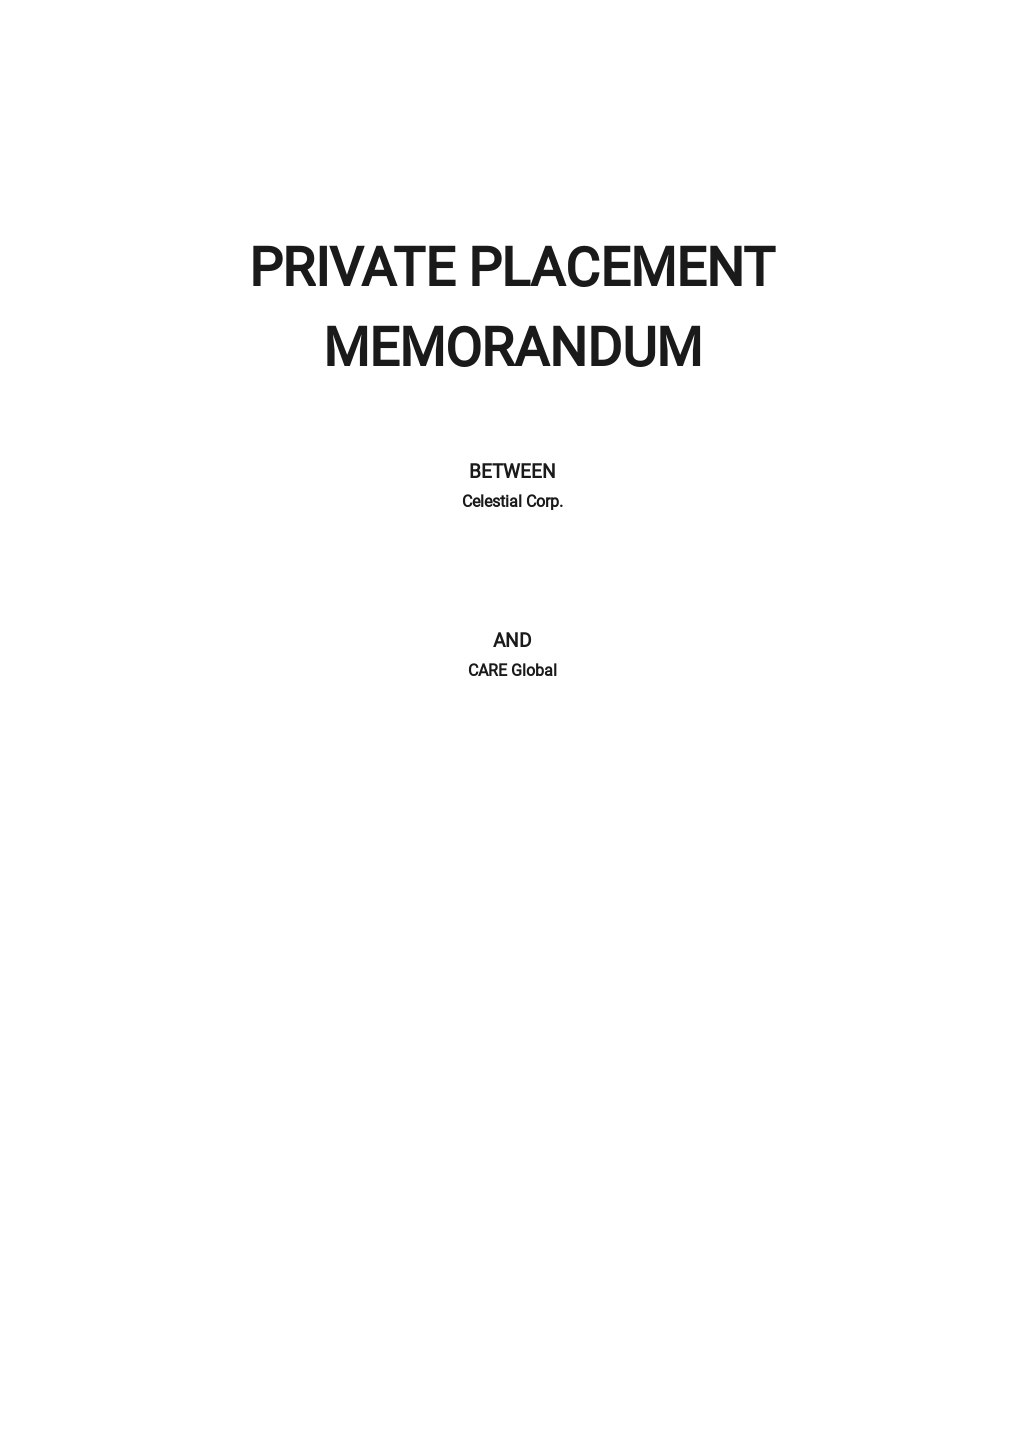 Private Placement Memorandum Template.jpe